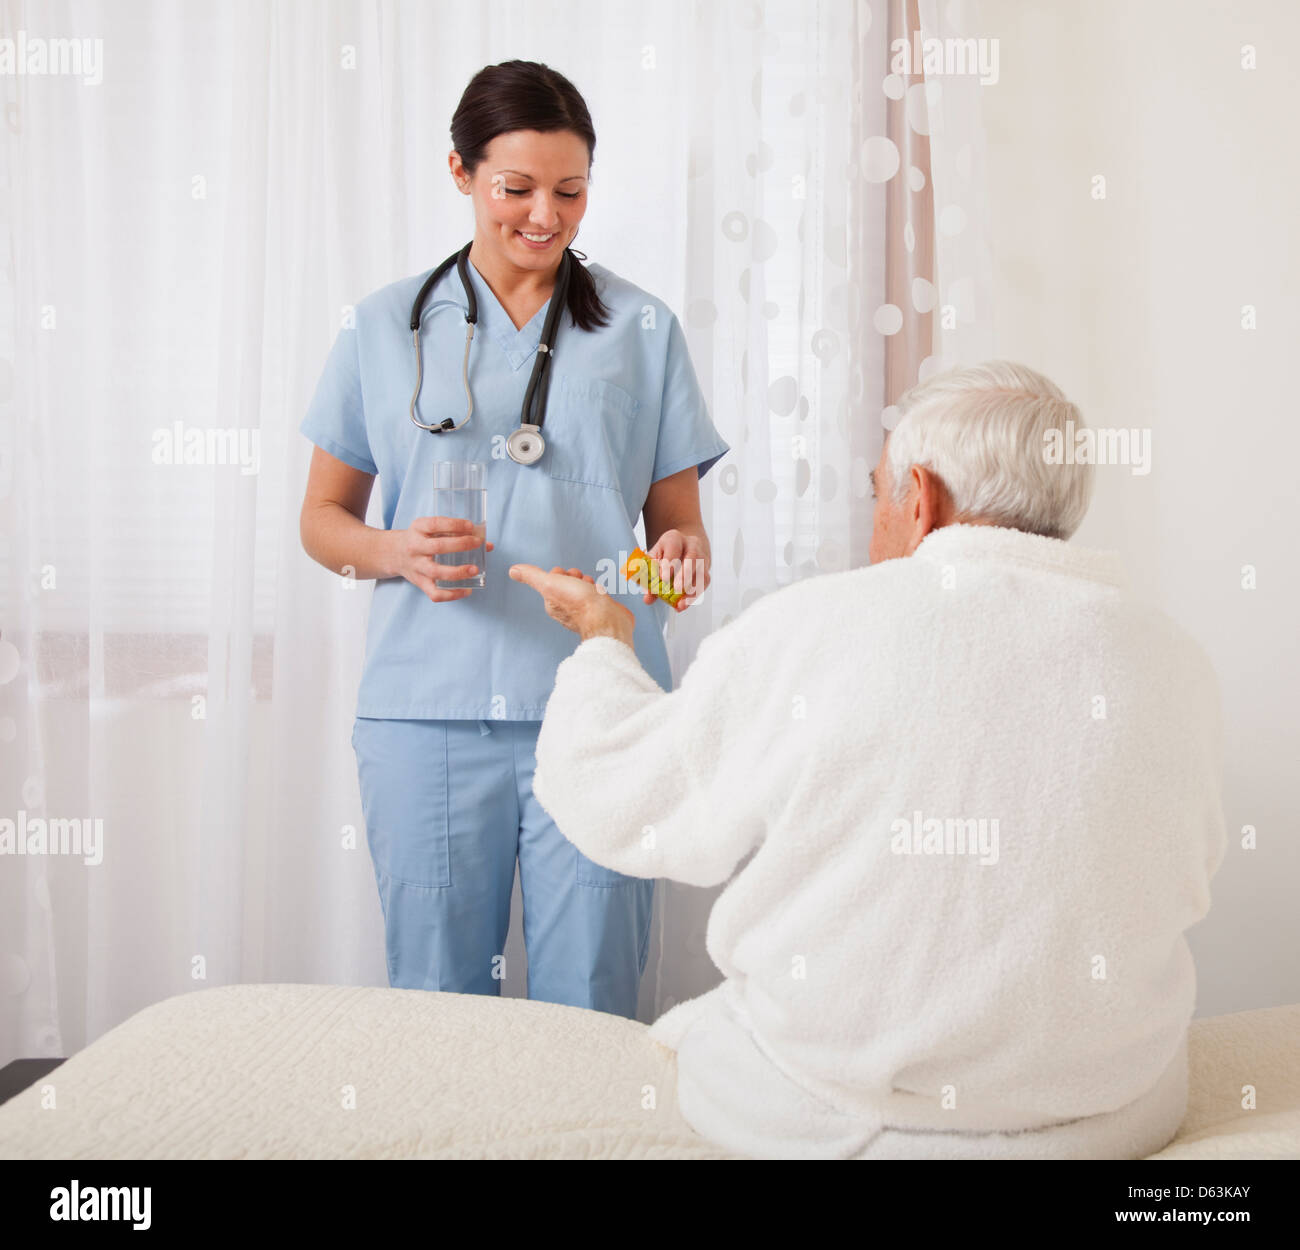 Nurse giving medicine to senior patient Stock Photo